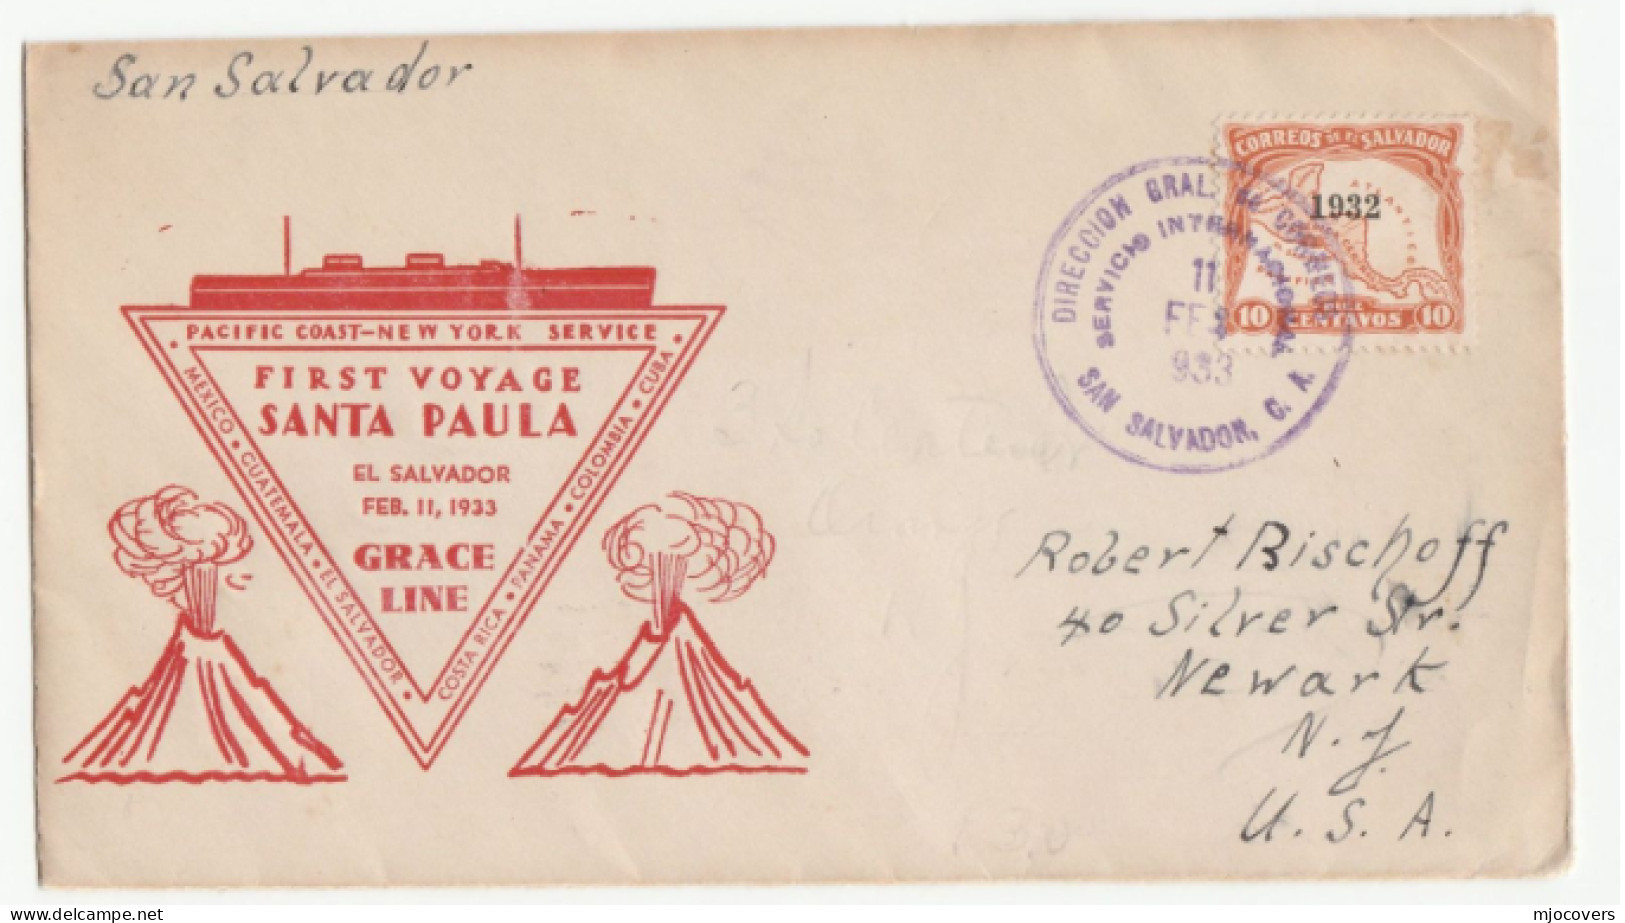 ERUPTING  VOLCANO 1933 Pacific Coast EL SALVADOR  First VOYAGE Ship SANTA PAULA  Grace Line To USA Cover Stamps - Vulkanen